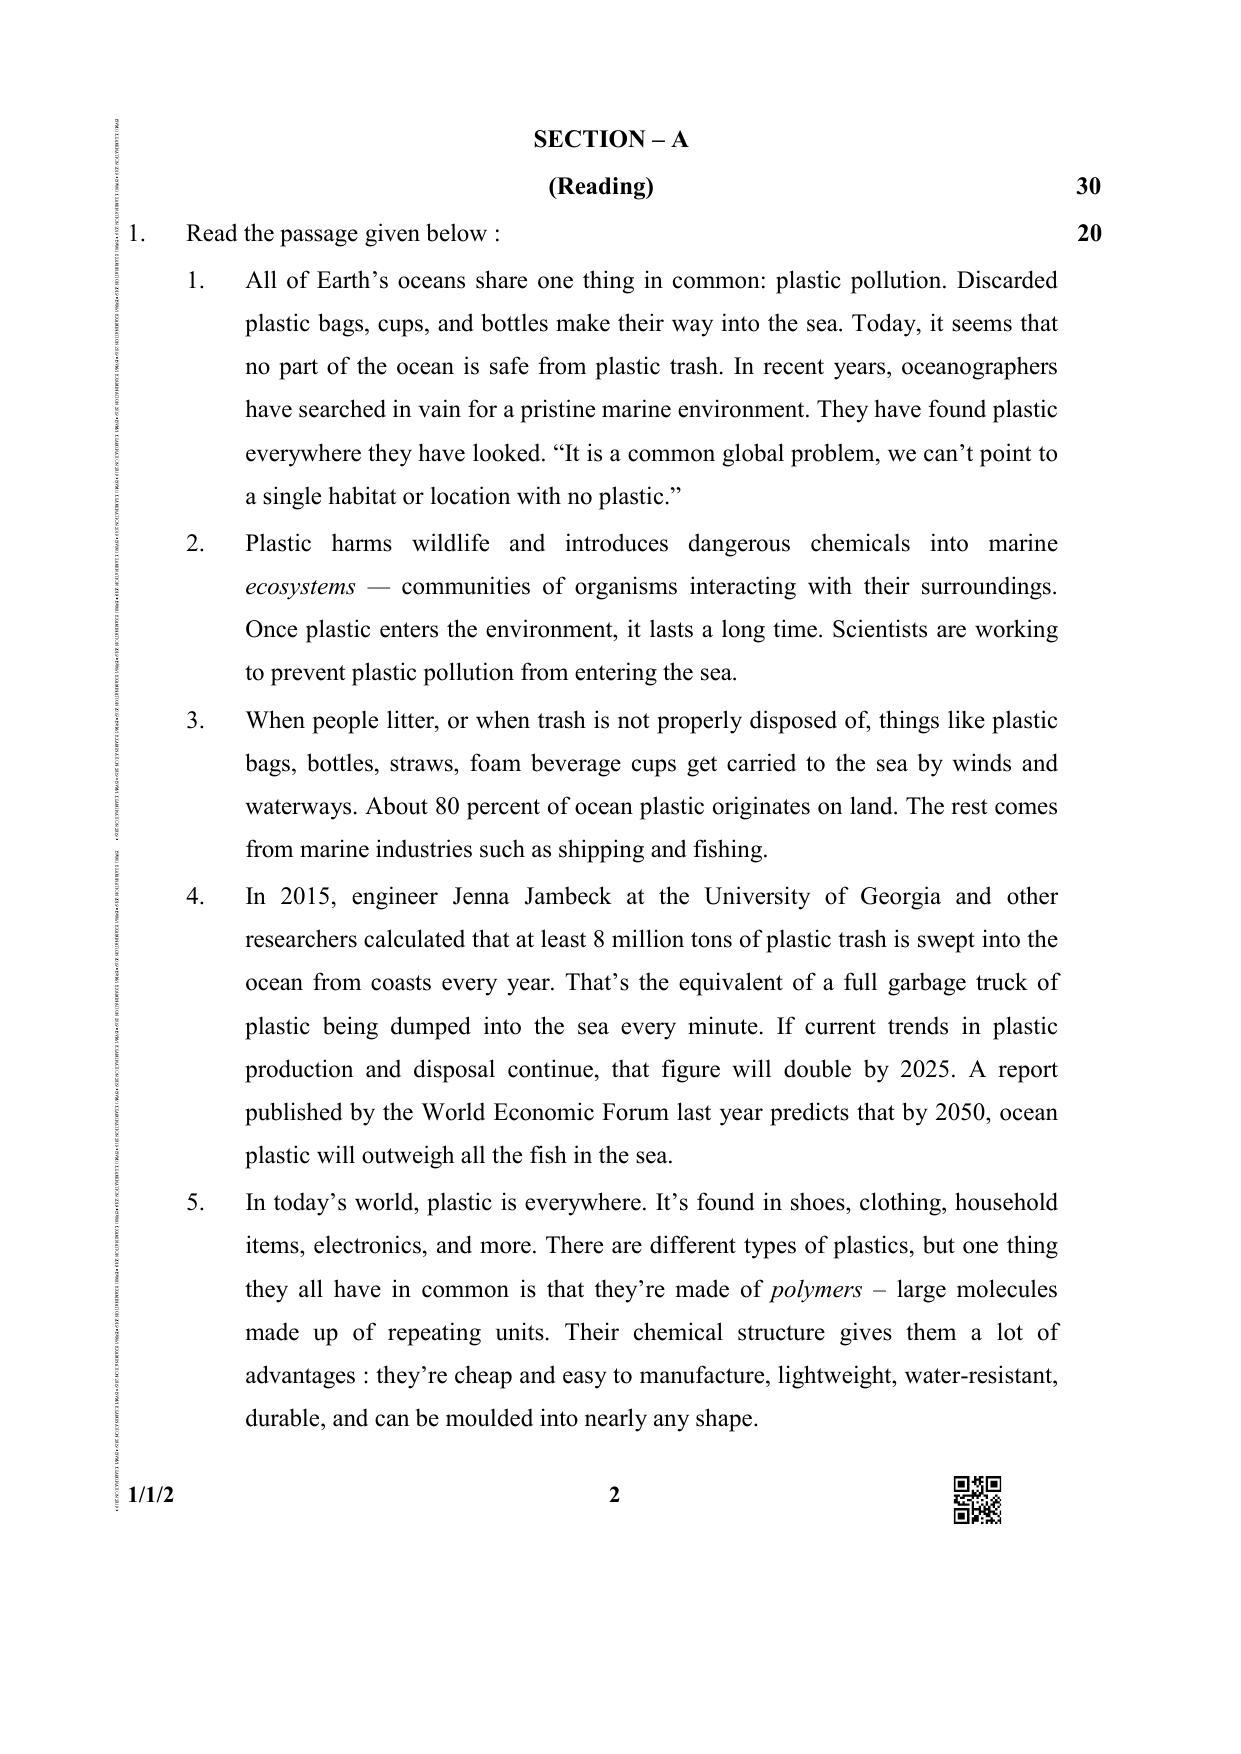 CBSE Class 12 1-1-2 (English Core) 2019 Question Paper - Page 2